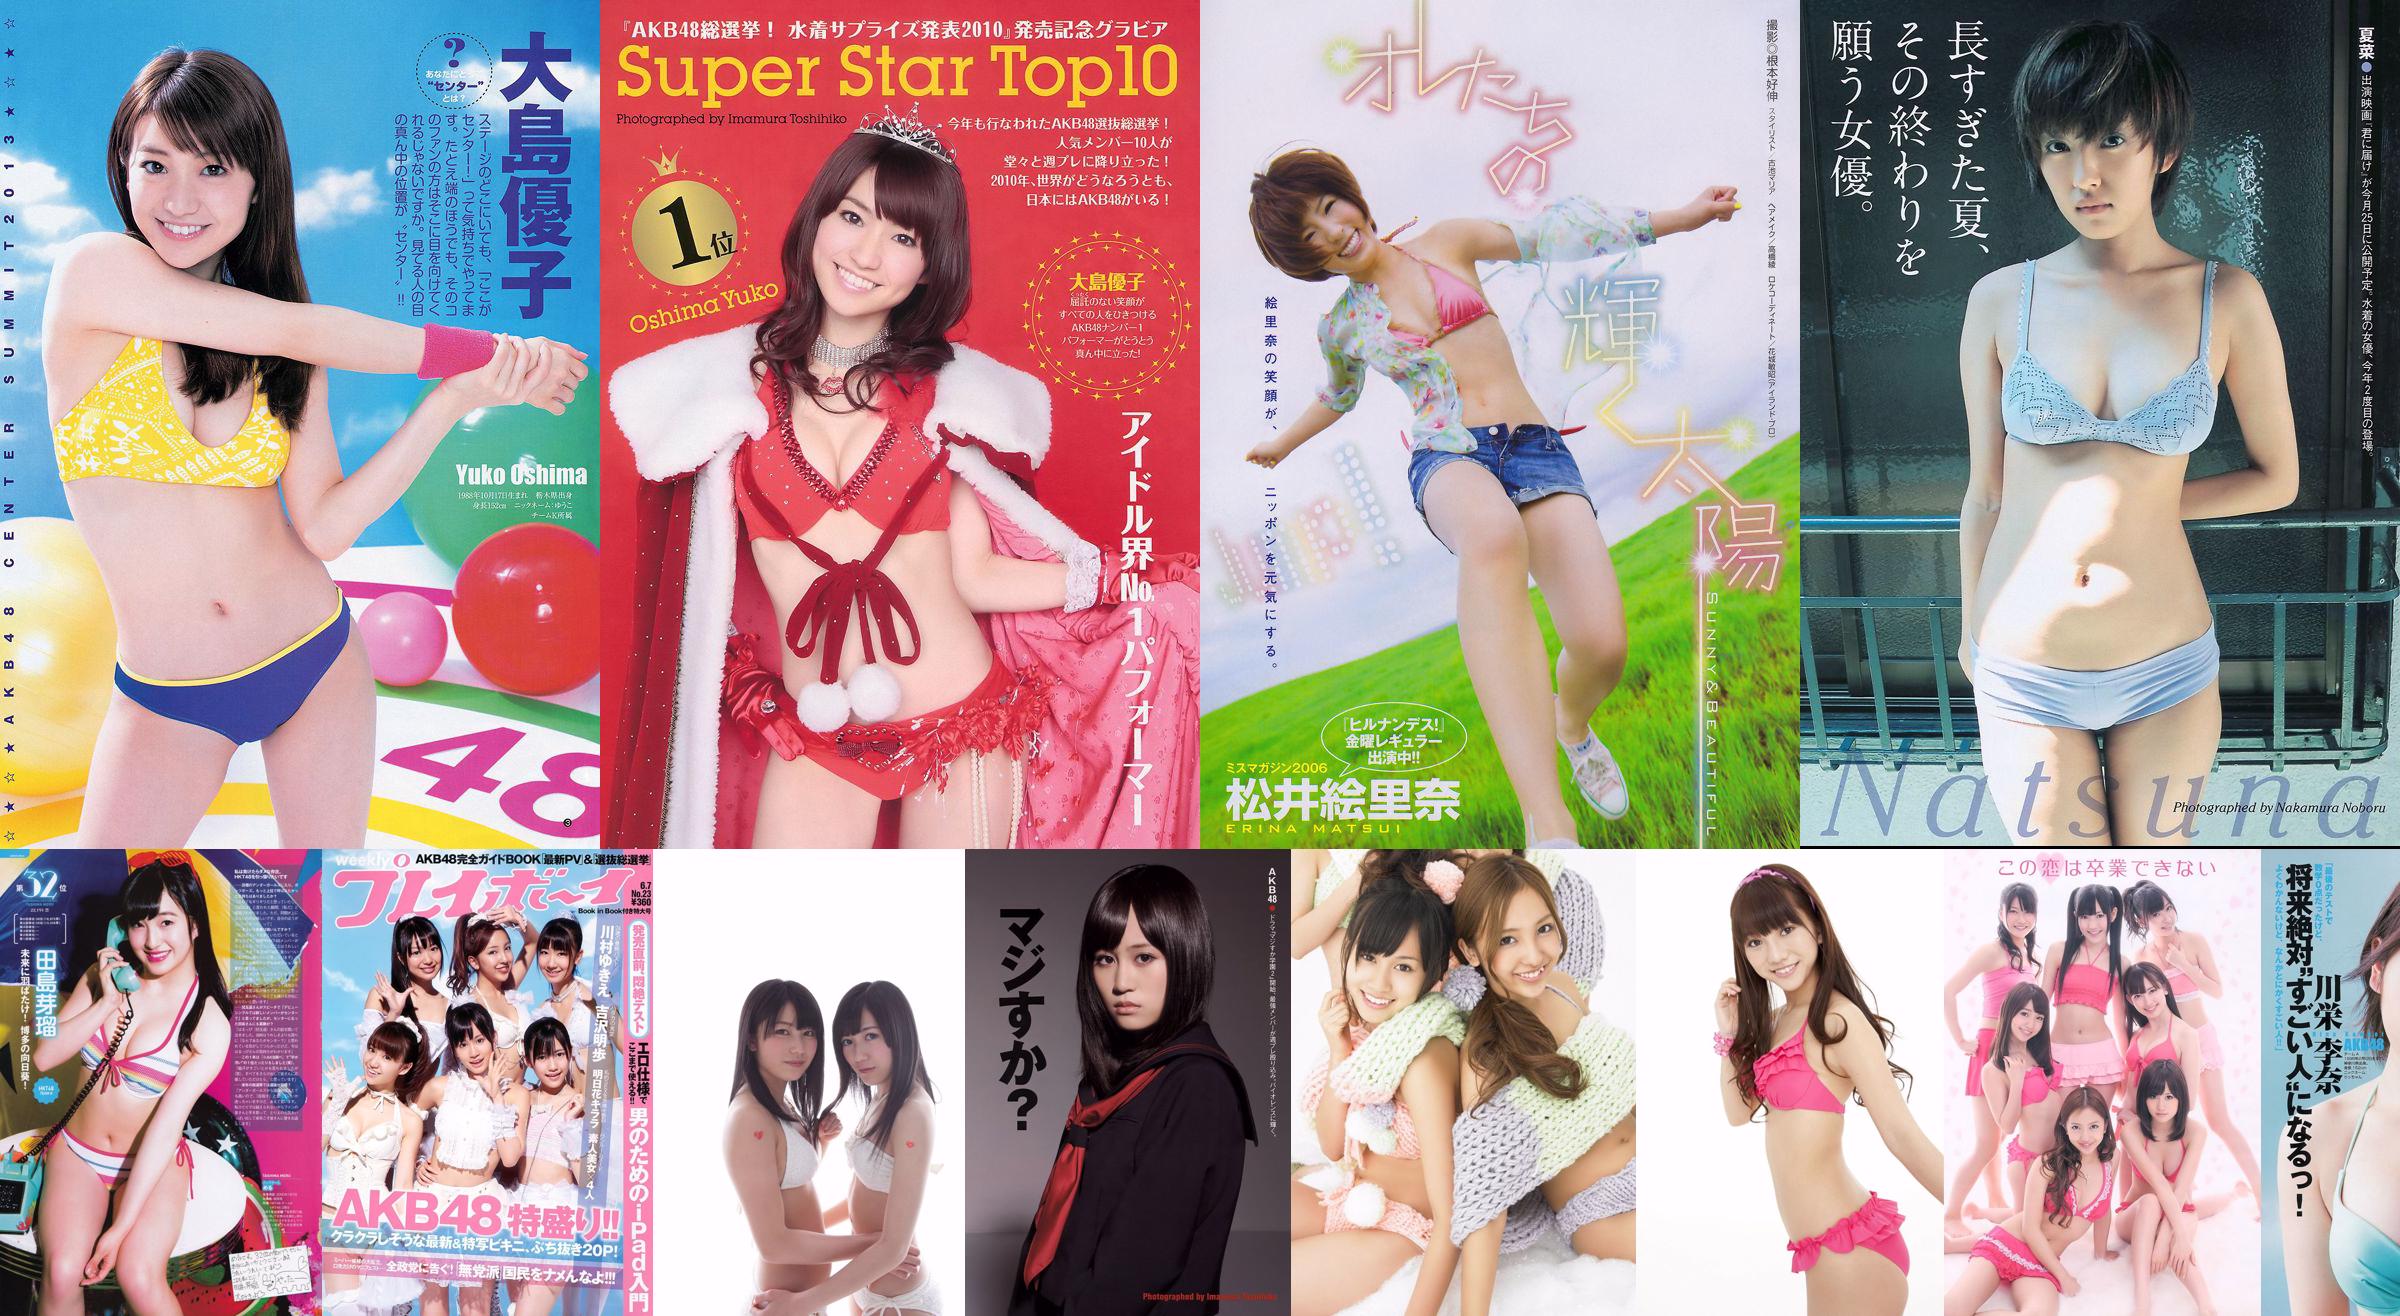 AKB48 Komatsu Mizuki [Tygodnik ヤ ン グ ジ ャ ン プ] Nr 48 Magazyn fotograficzny w 2011 r. No.e68b4c Strona 1